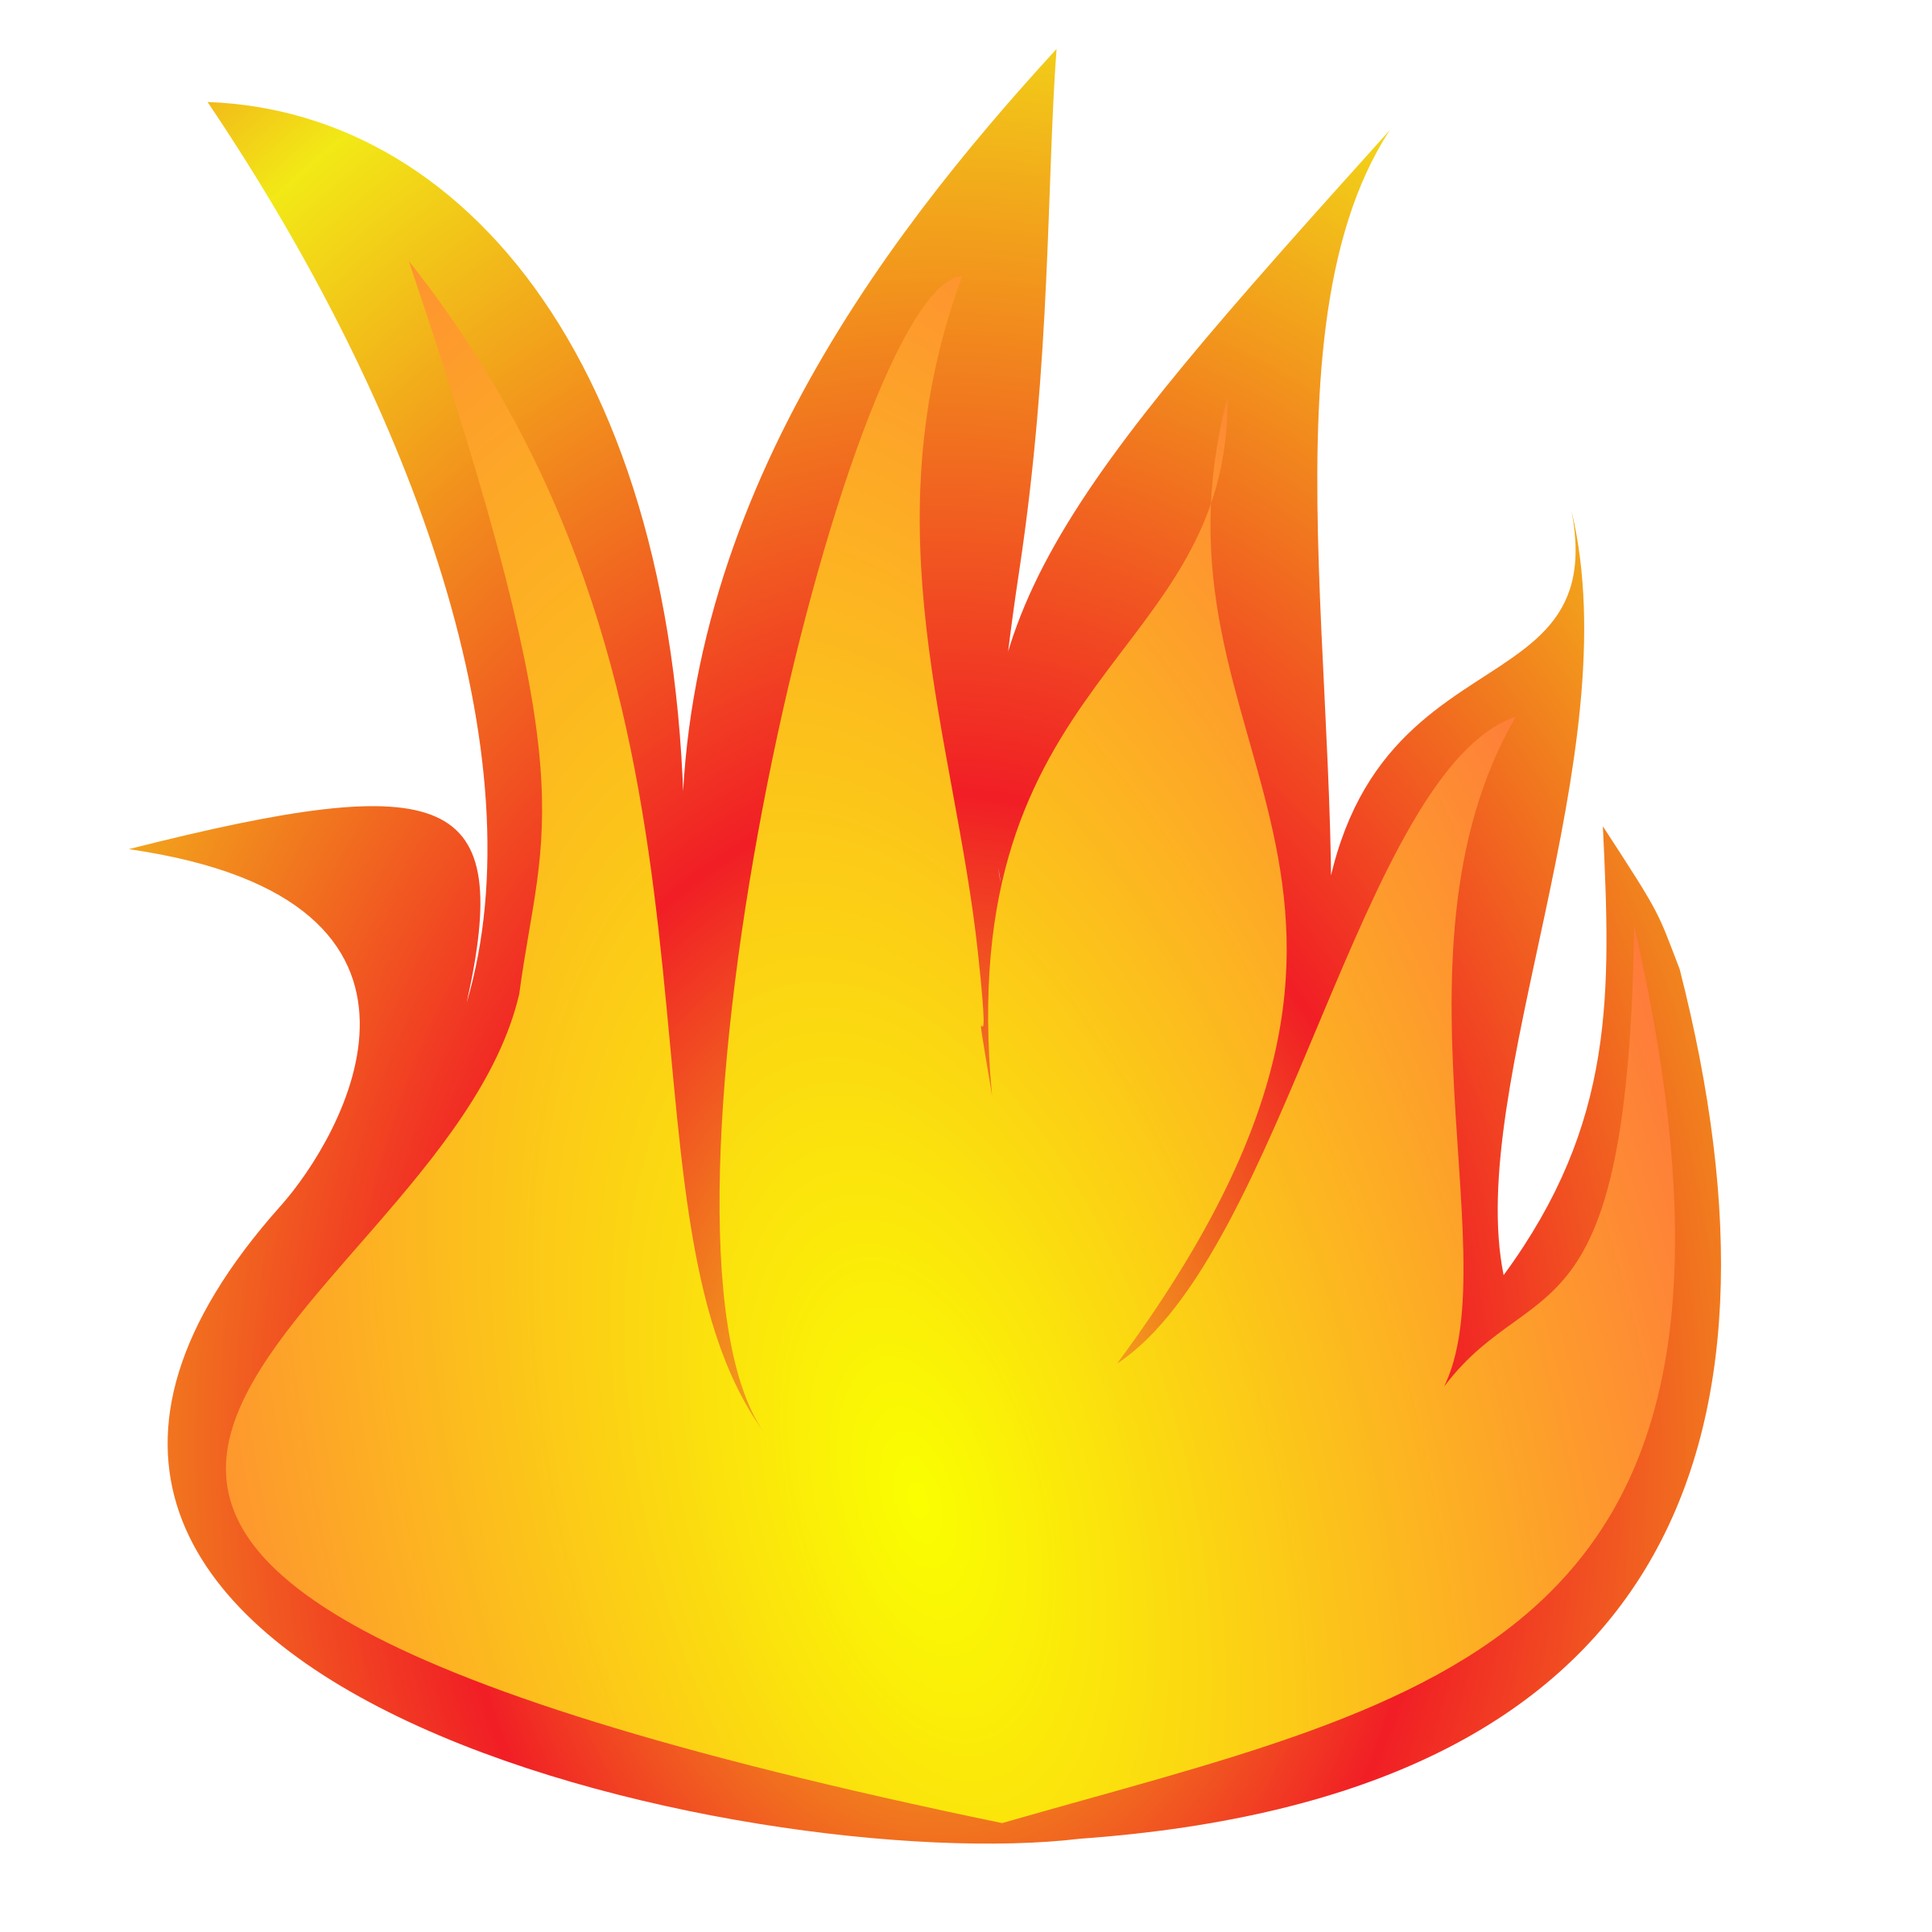 Fire flame clipart - Fire Flames Clip Art